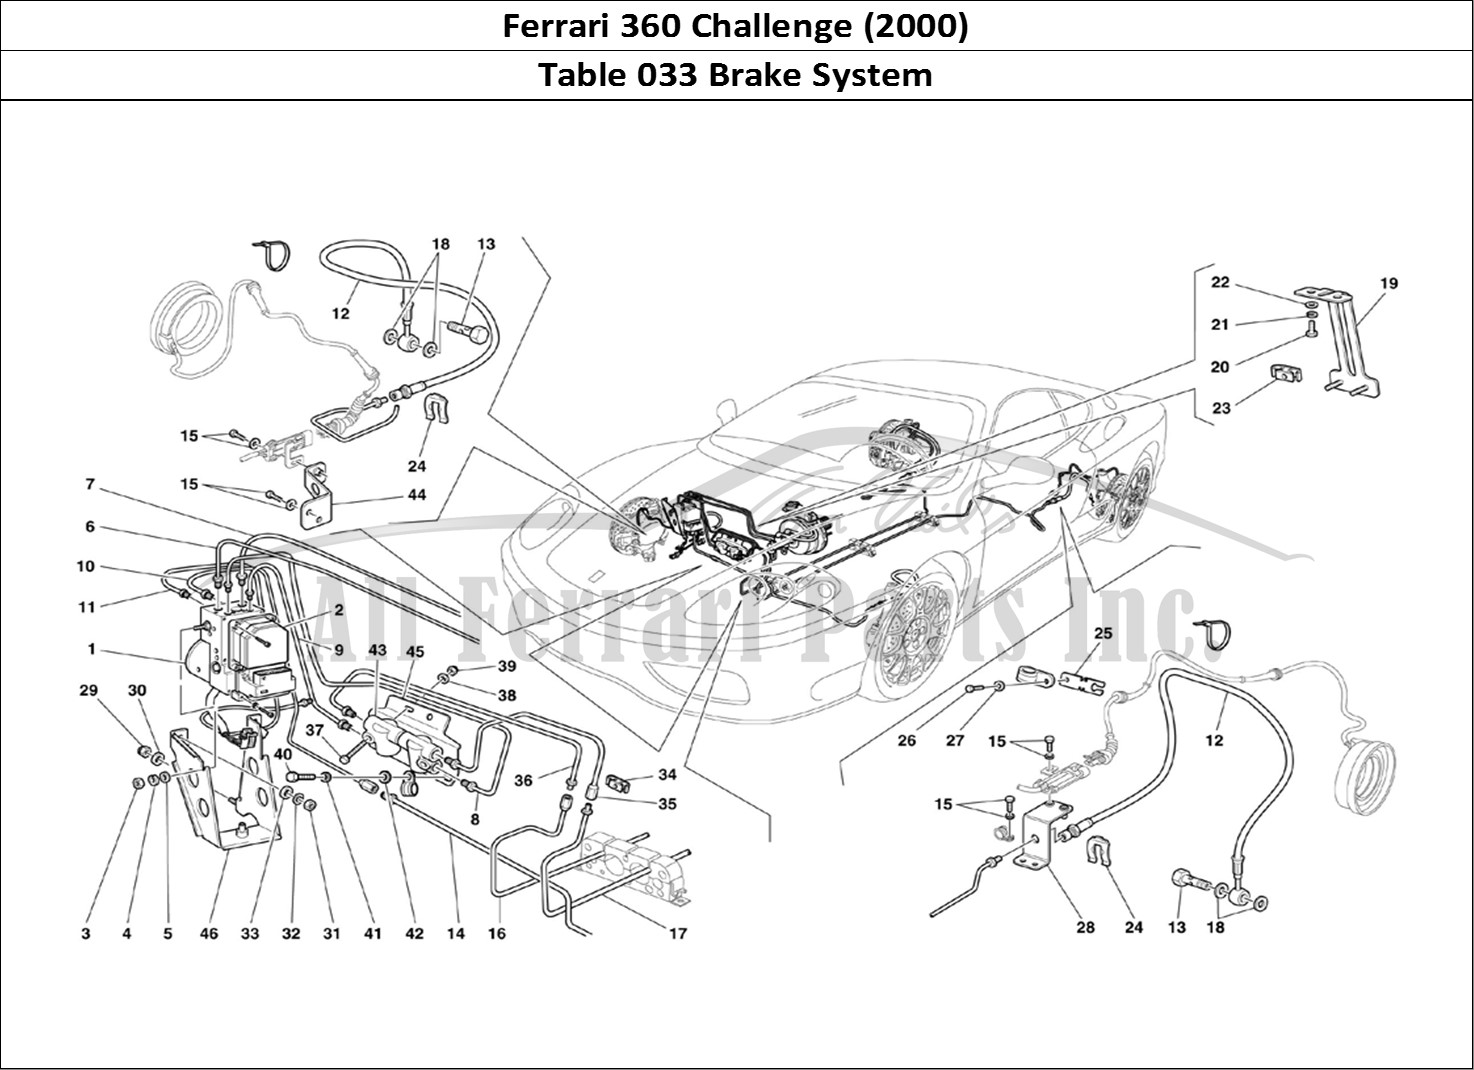 Ferrari Parts Ferrari 360 Challenge (2000) Page 033 Brake System